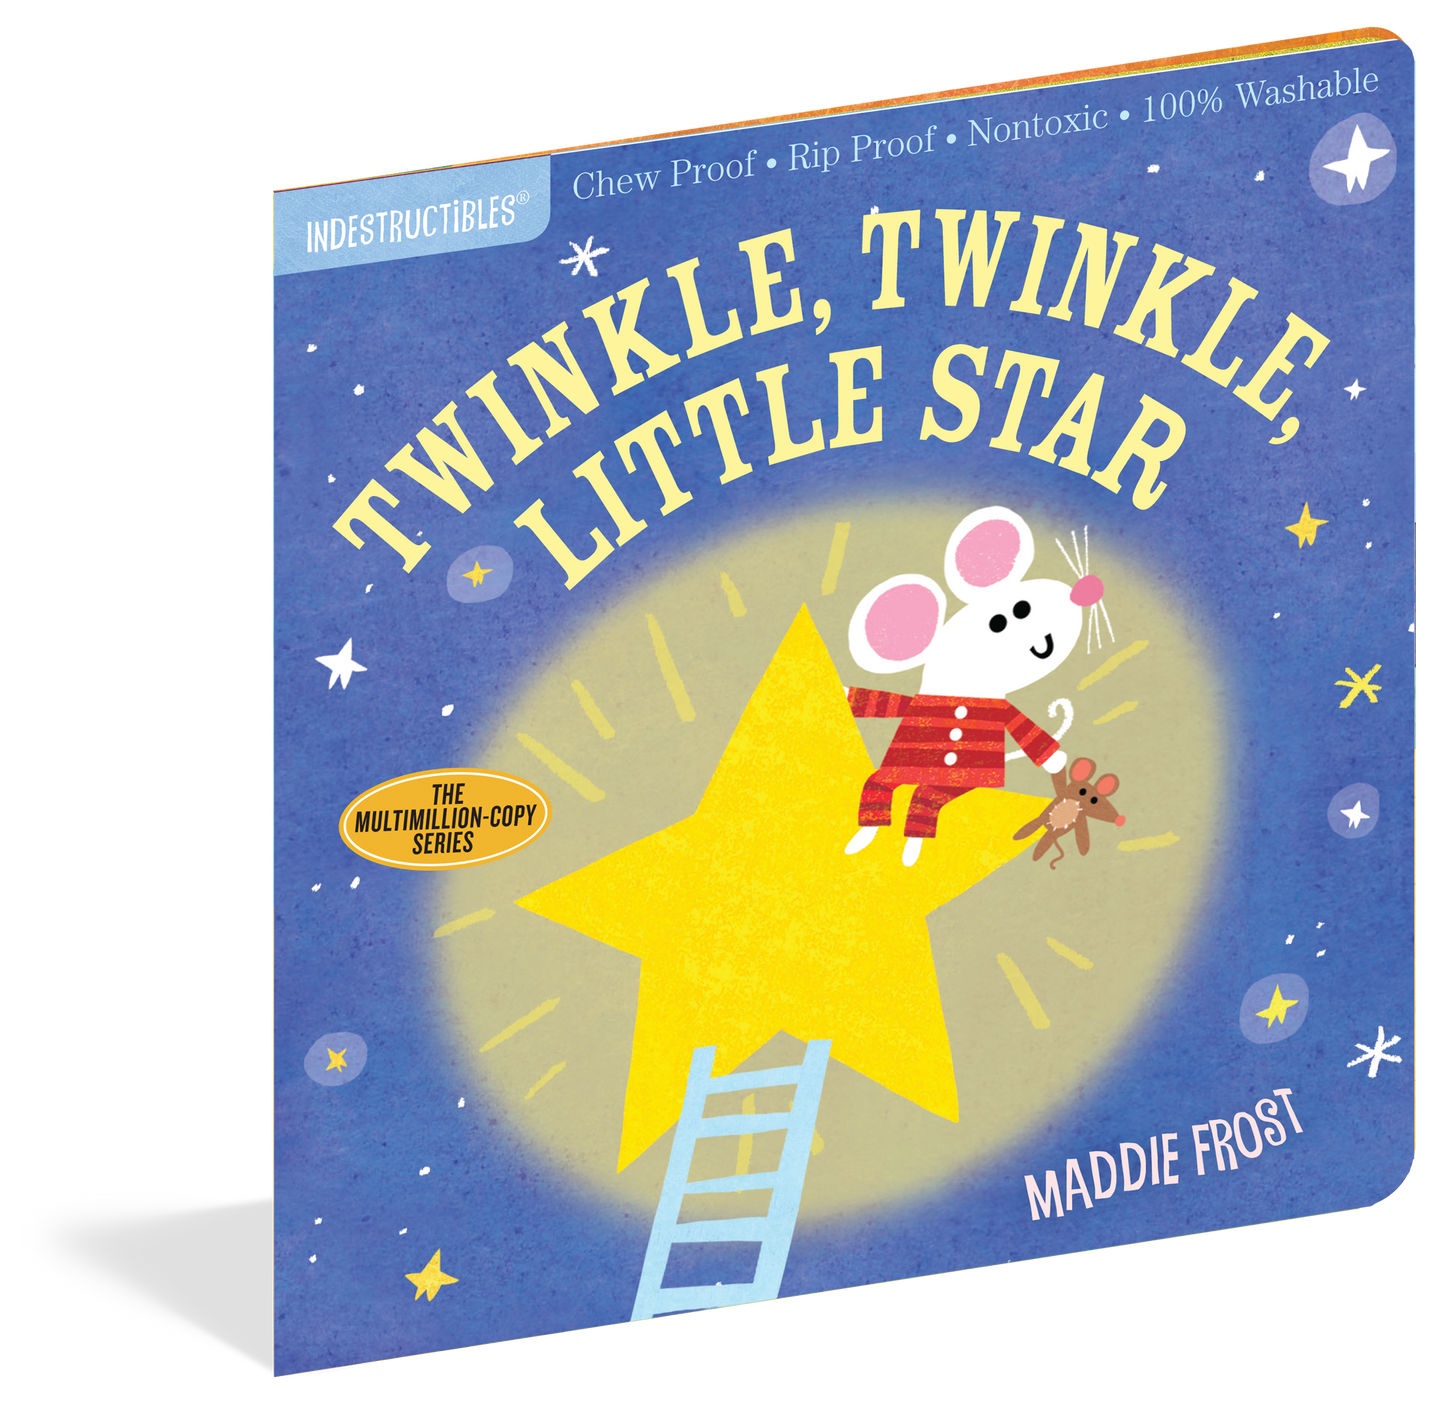 Indestructibles: Twinkle Twinkle